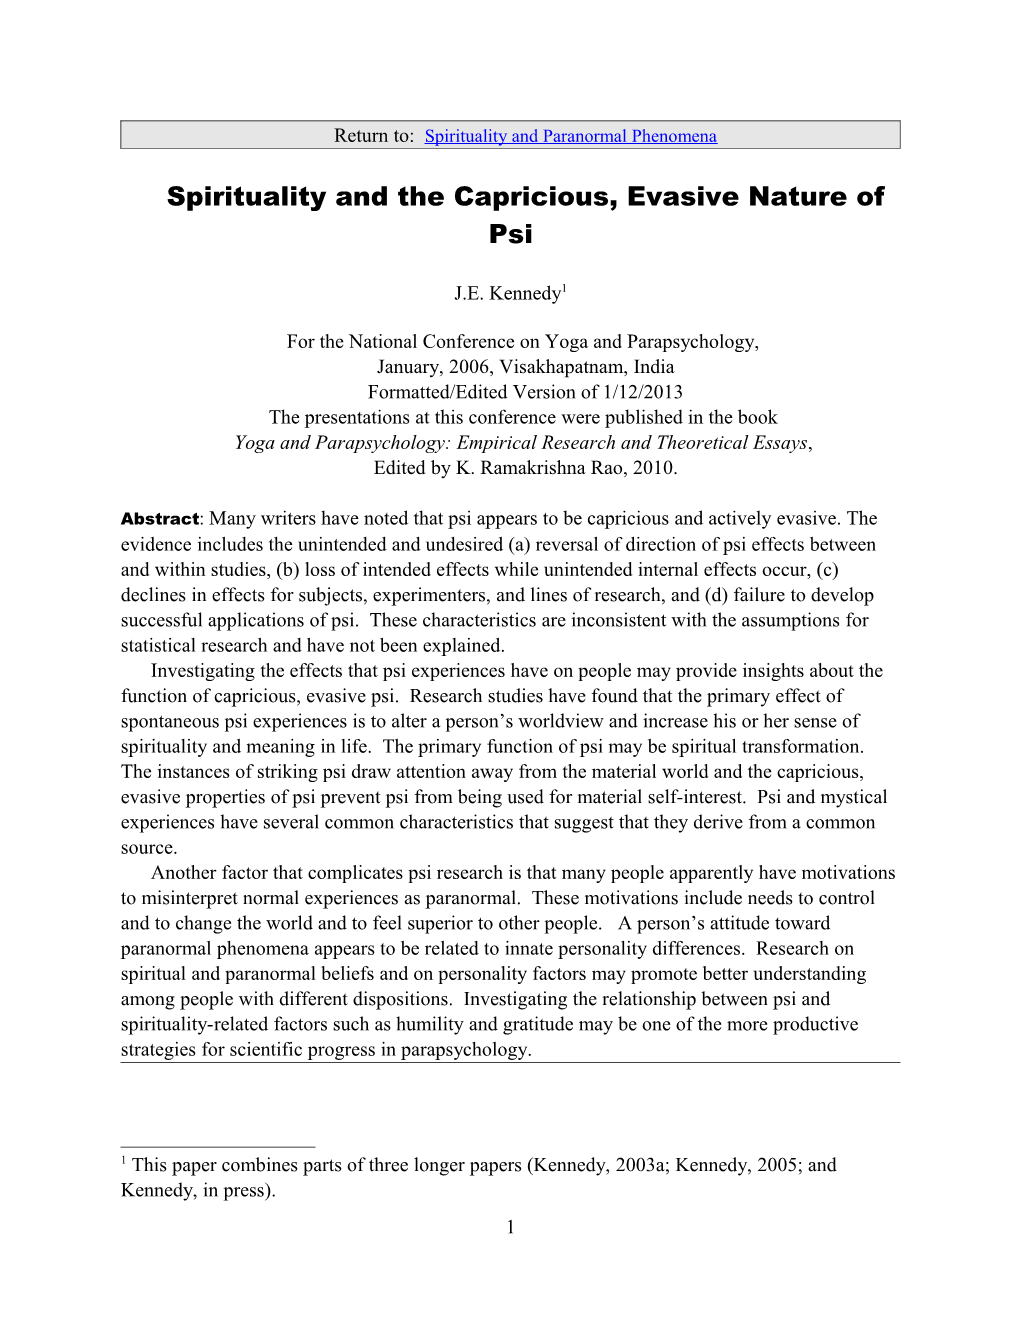 Spirituality and the Capricious, Evasive Nature of Psi